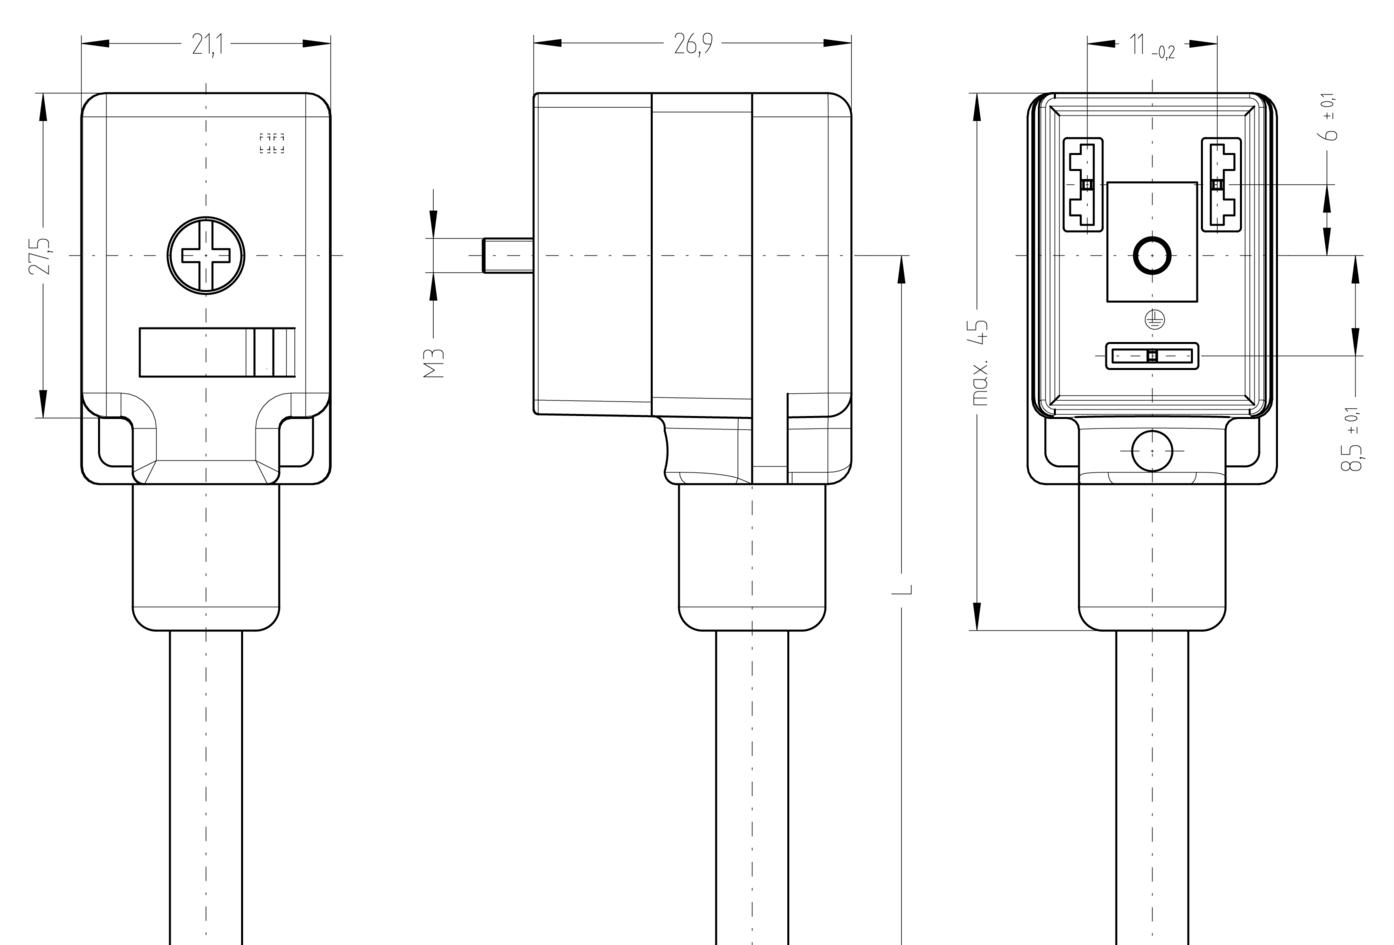 Valve connector, housing style BI, 2+PE, M12, male, straight, 4+PE, suppressor diode